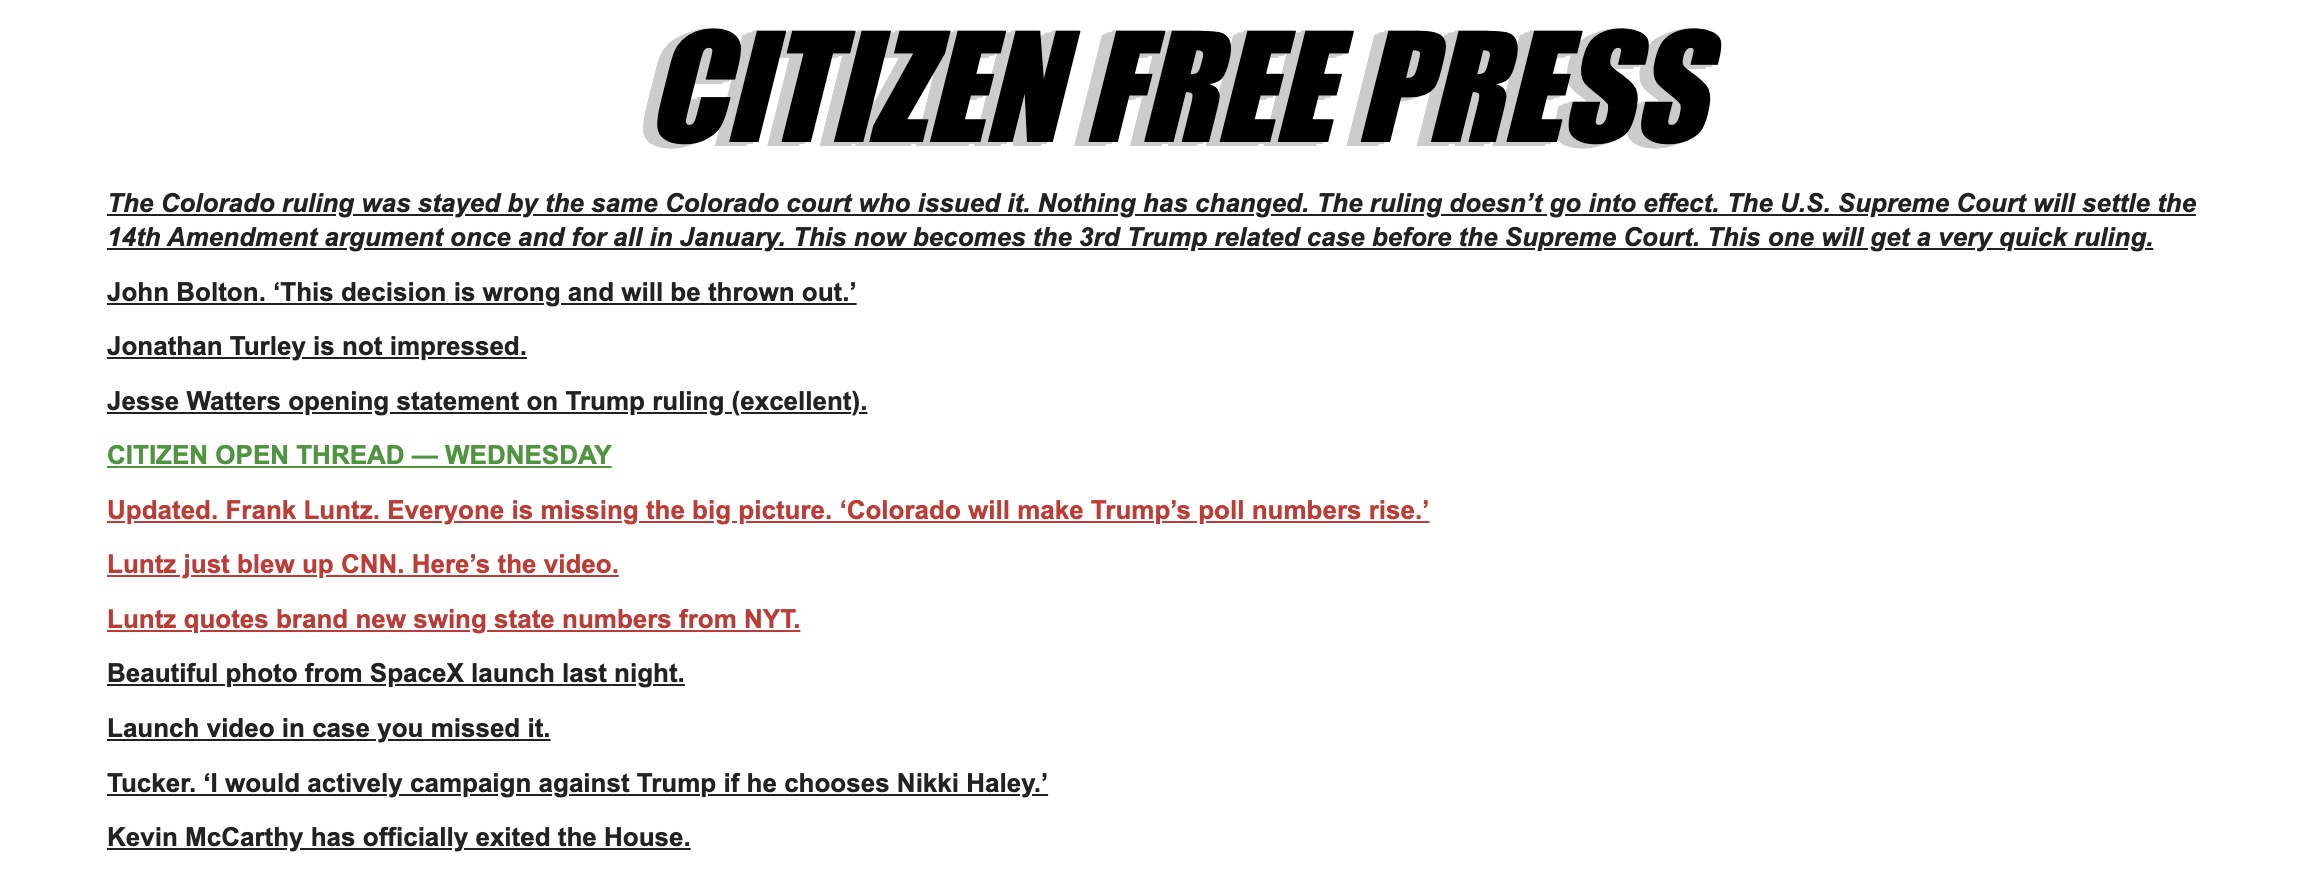 Citizen Free Press, Dec. 20